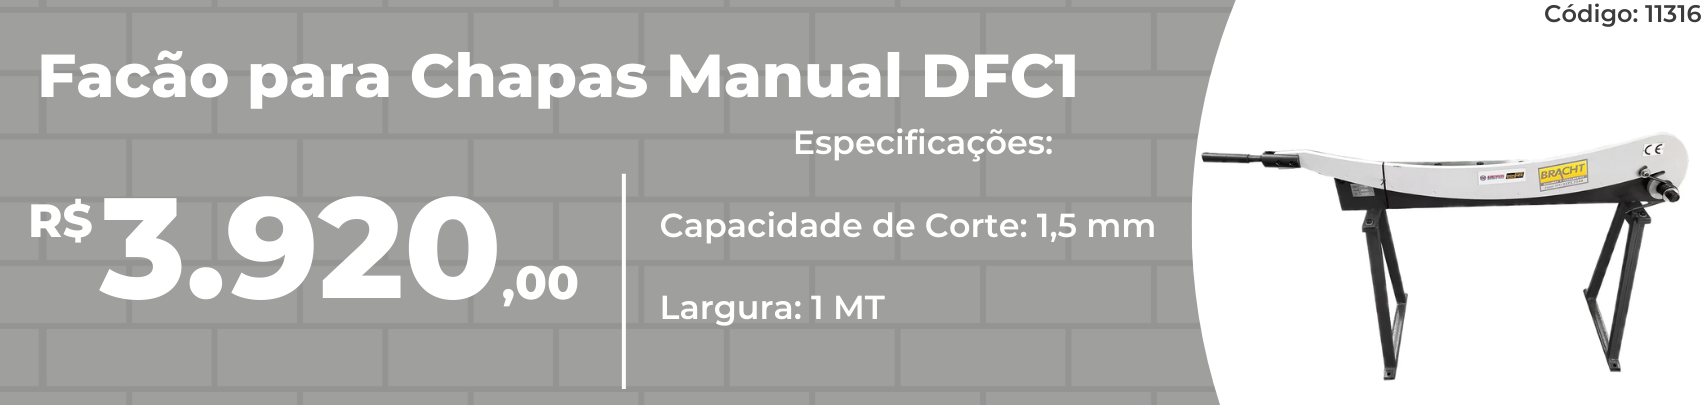 Facao Corte Chapa 1000MMx1,5MM DFC1 Donner